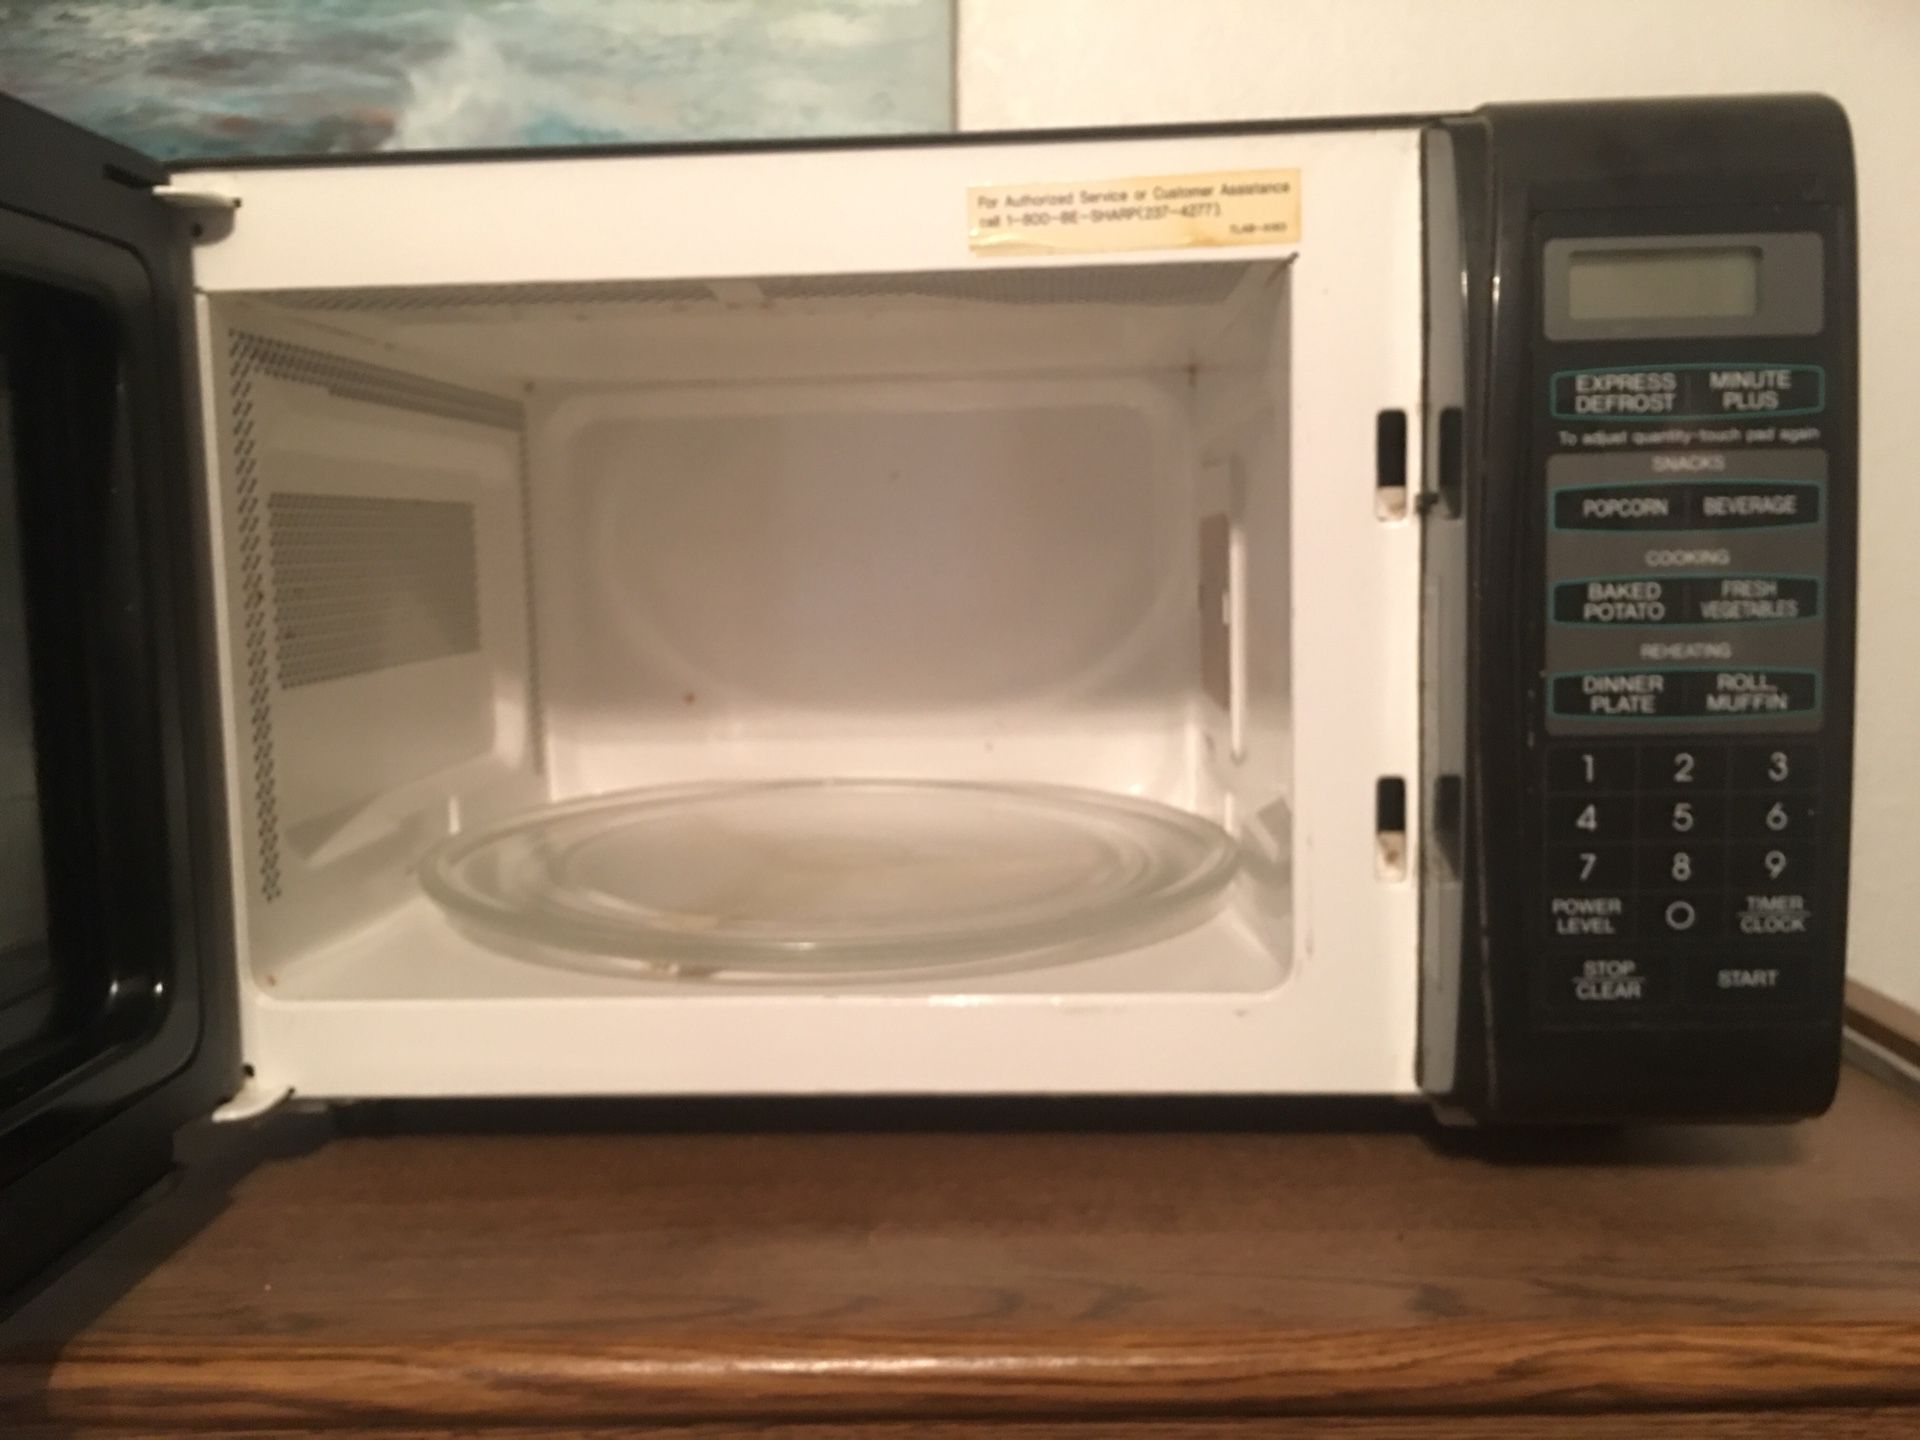 Sharp Microwave 1.4 SMCCH Y7J for Sale in Glendale, AZ - OfferUp